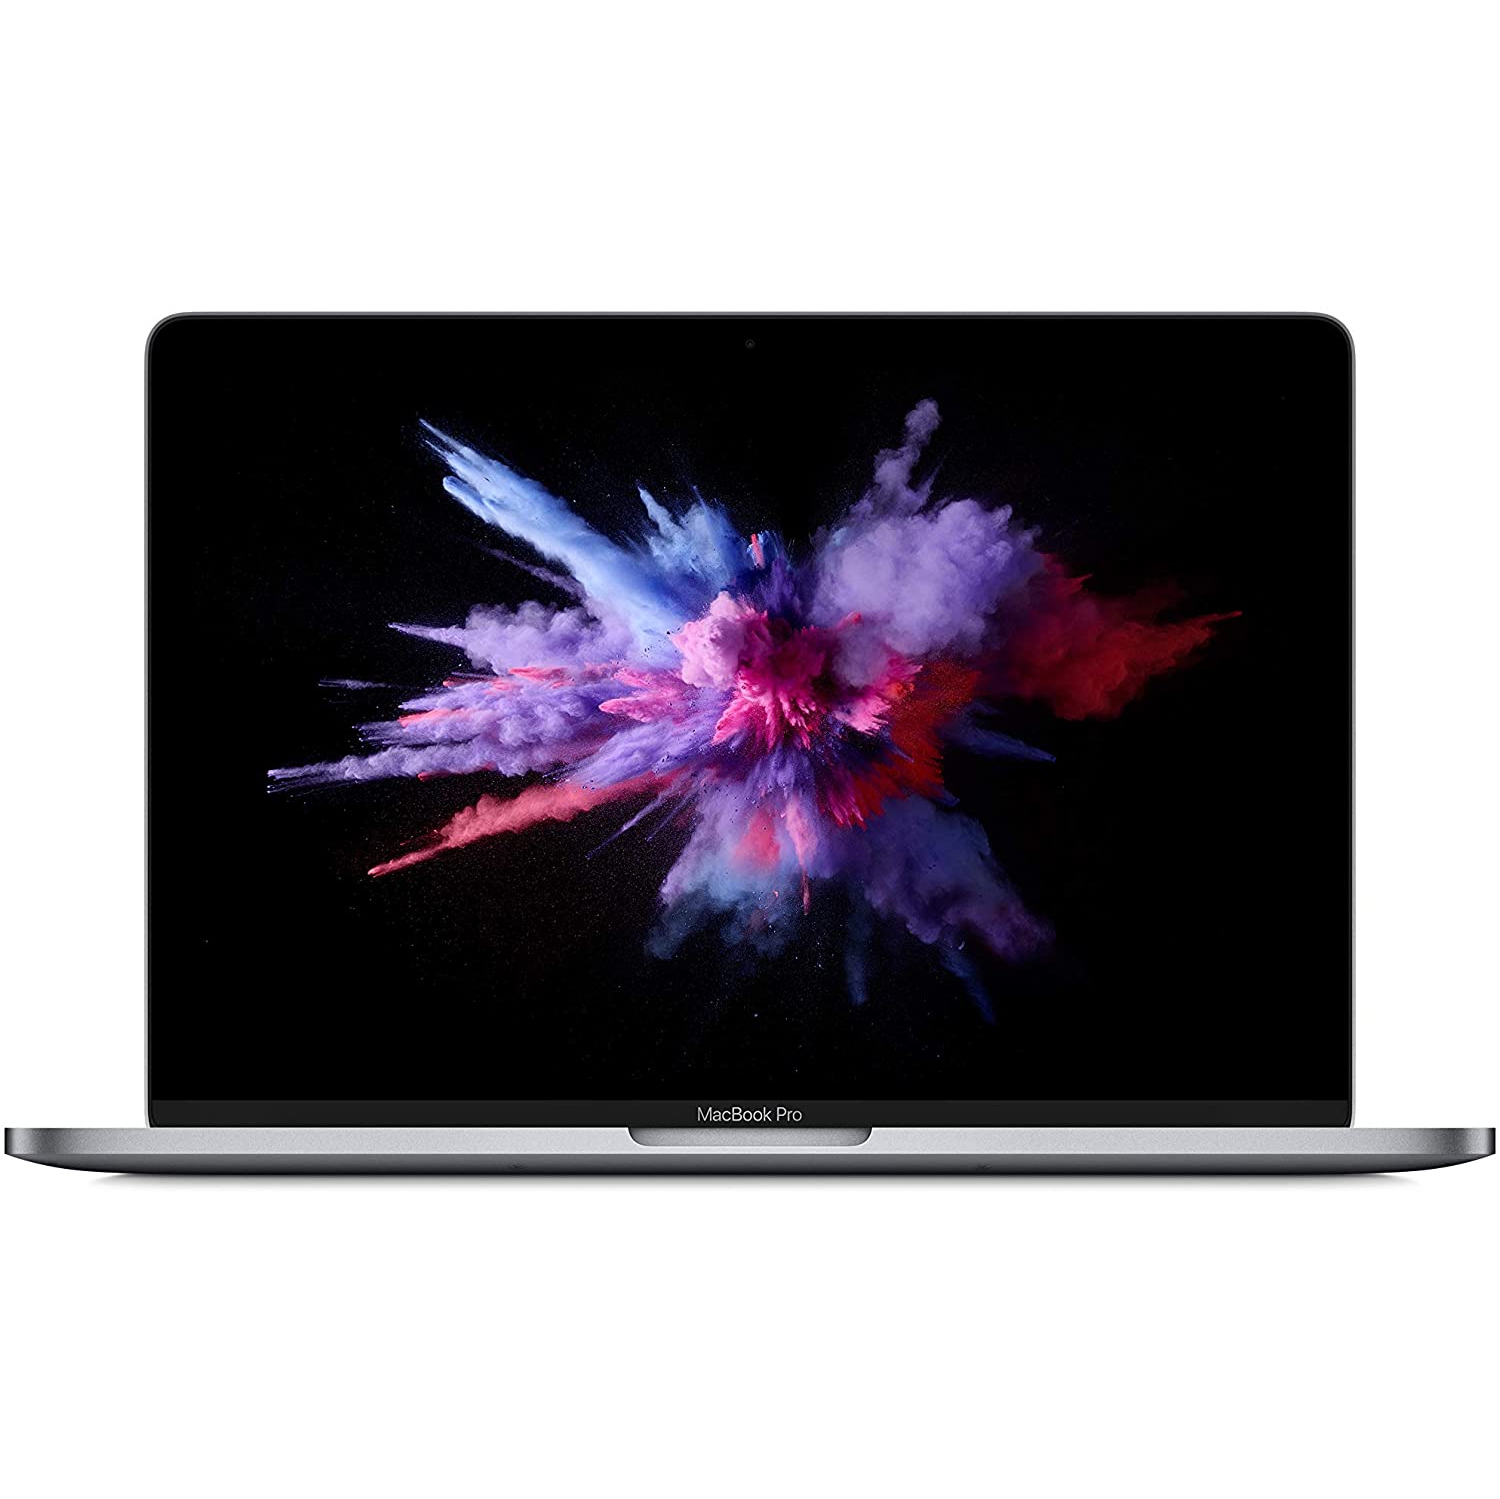 Apple MacBook Pro (Model: A1989, 13-inch, 8GB RAM, 512GB Storage, 2.4GHz Intel Core i5) - Space Gray - Open Box (10/10 Condition)